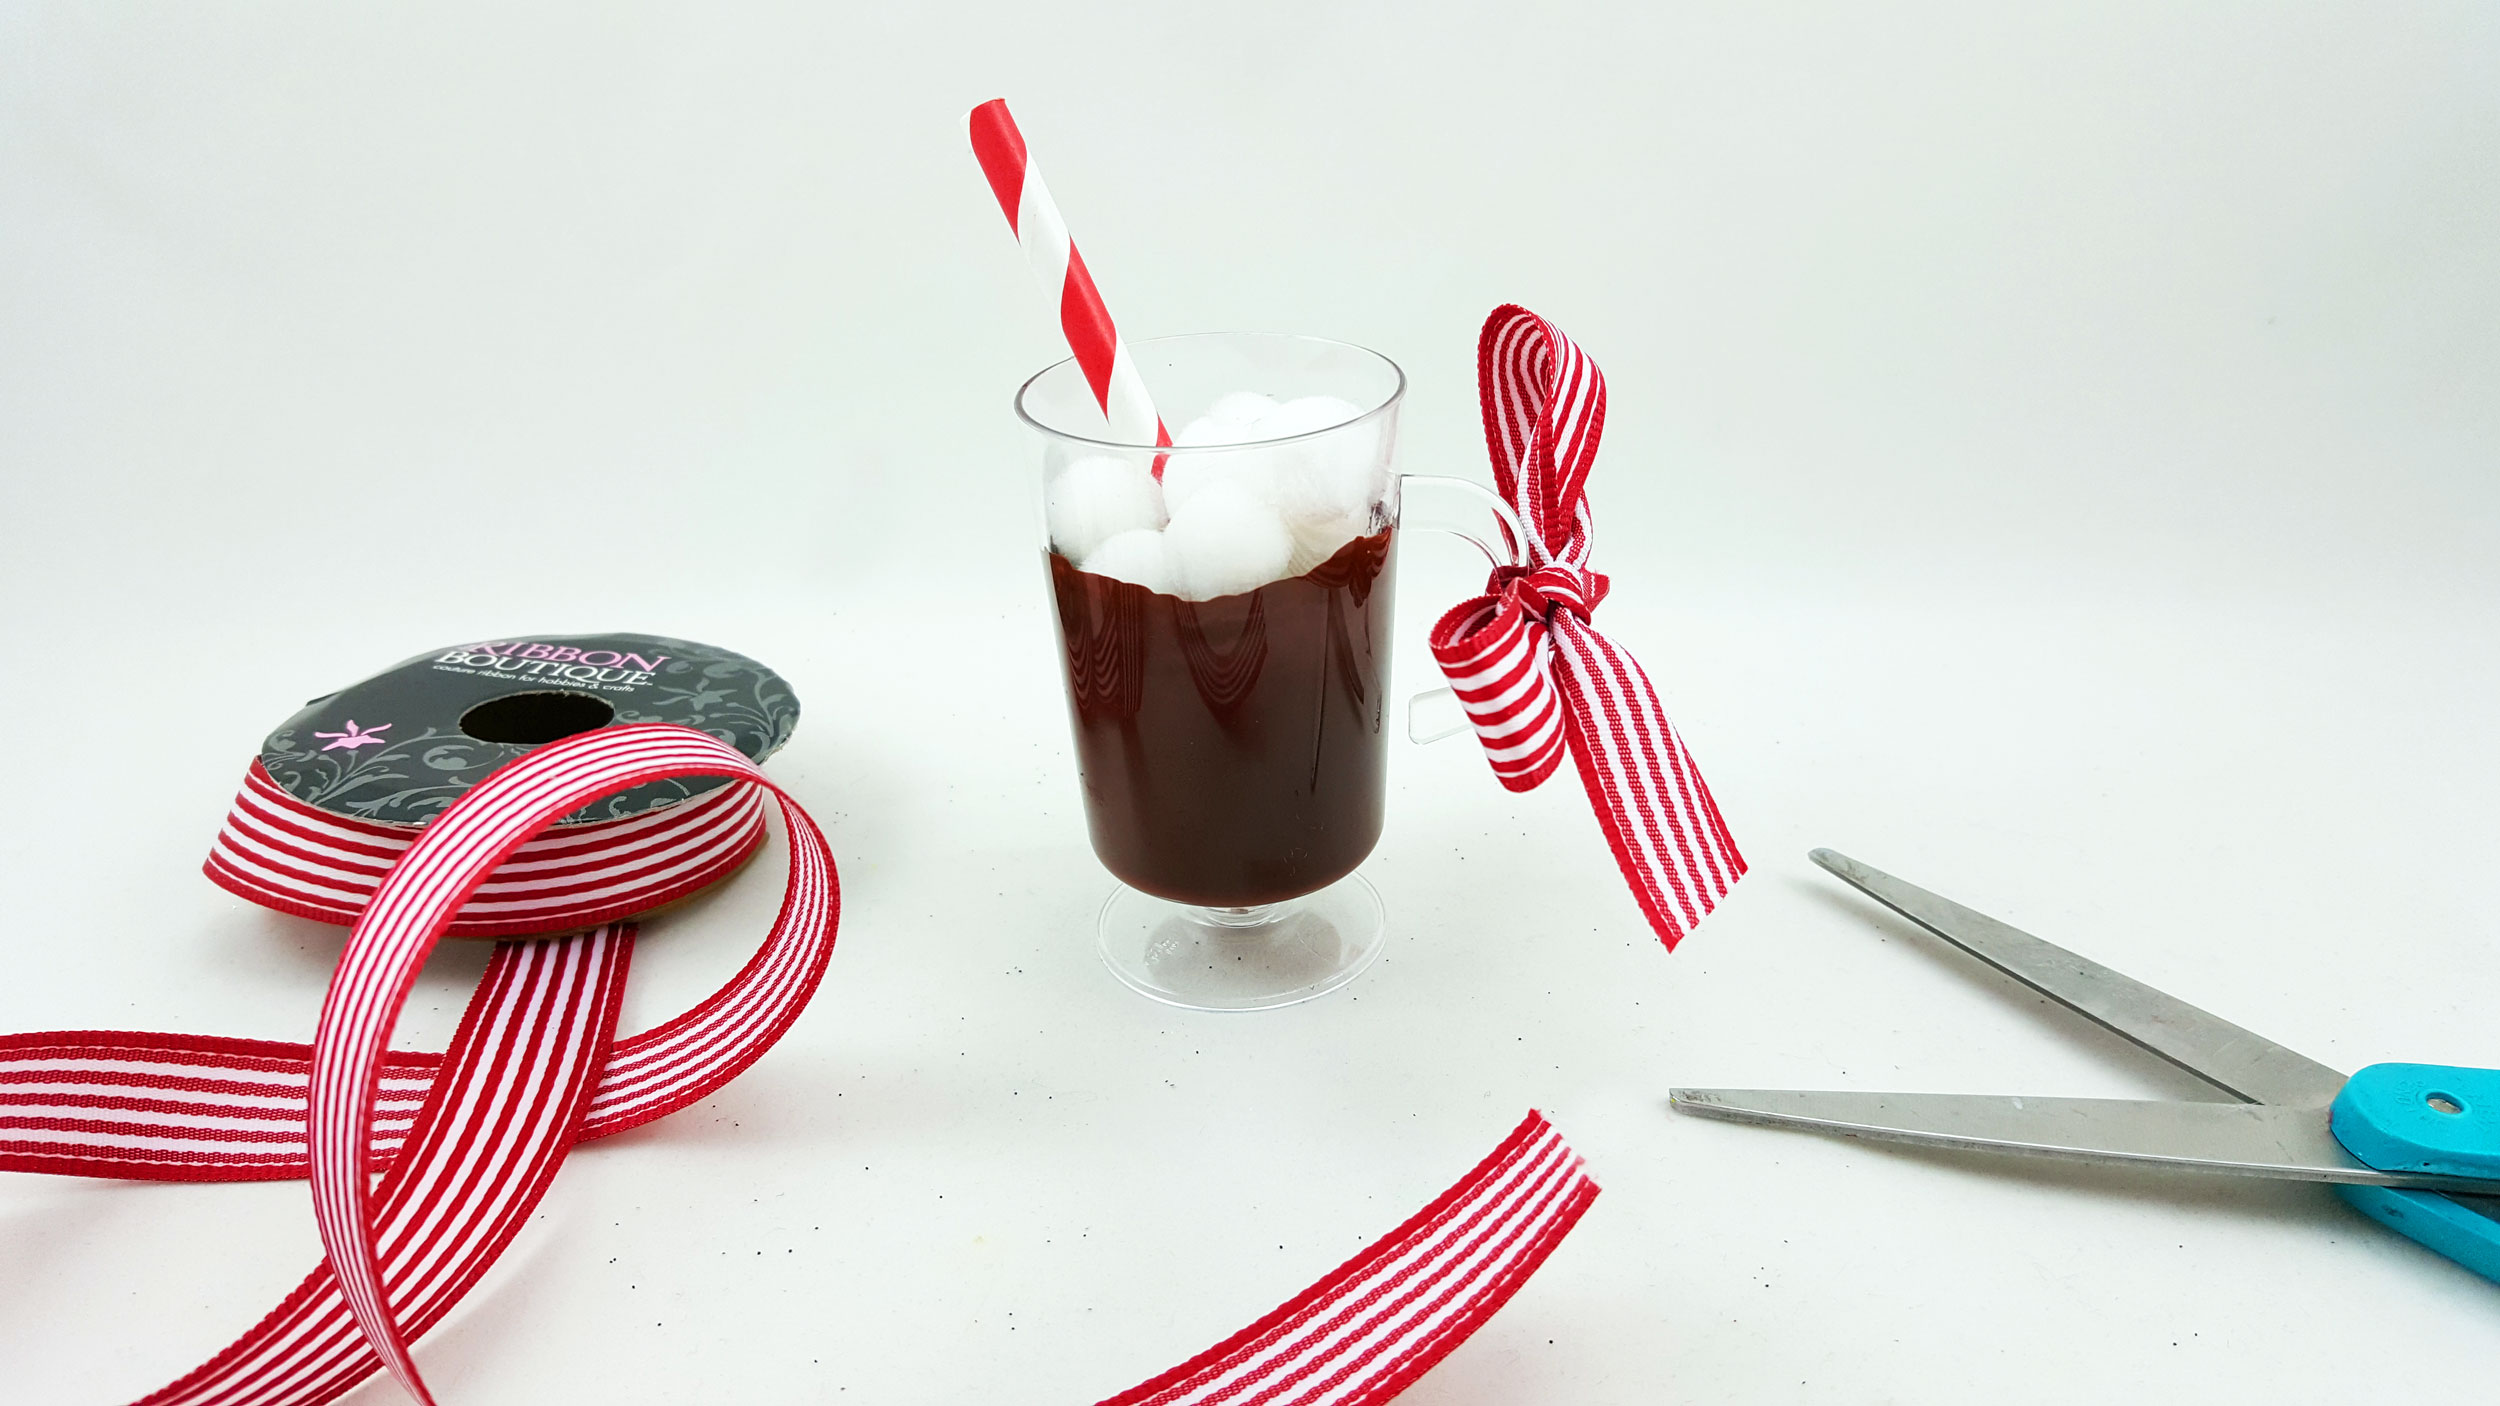 DIY Hot Chocolate Ornament - Step 4